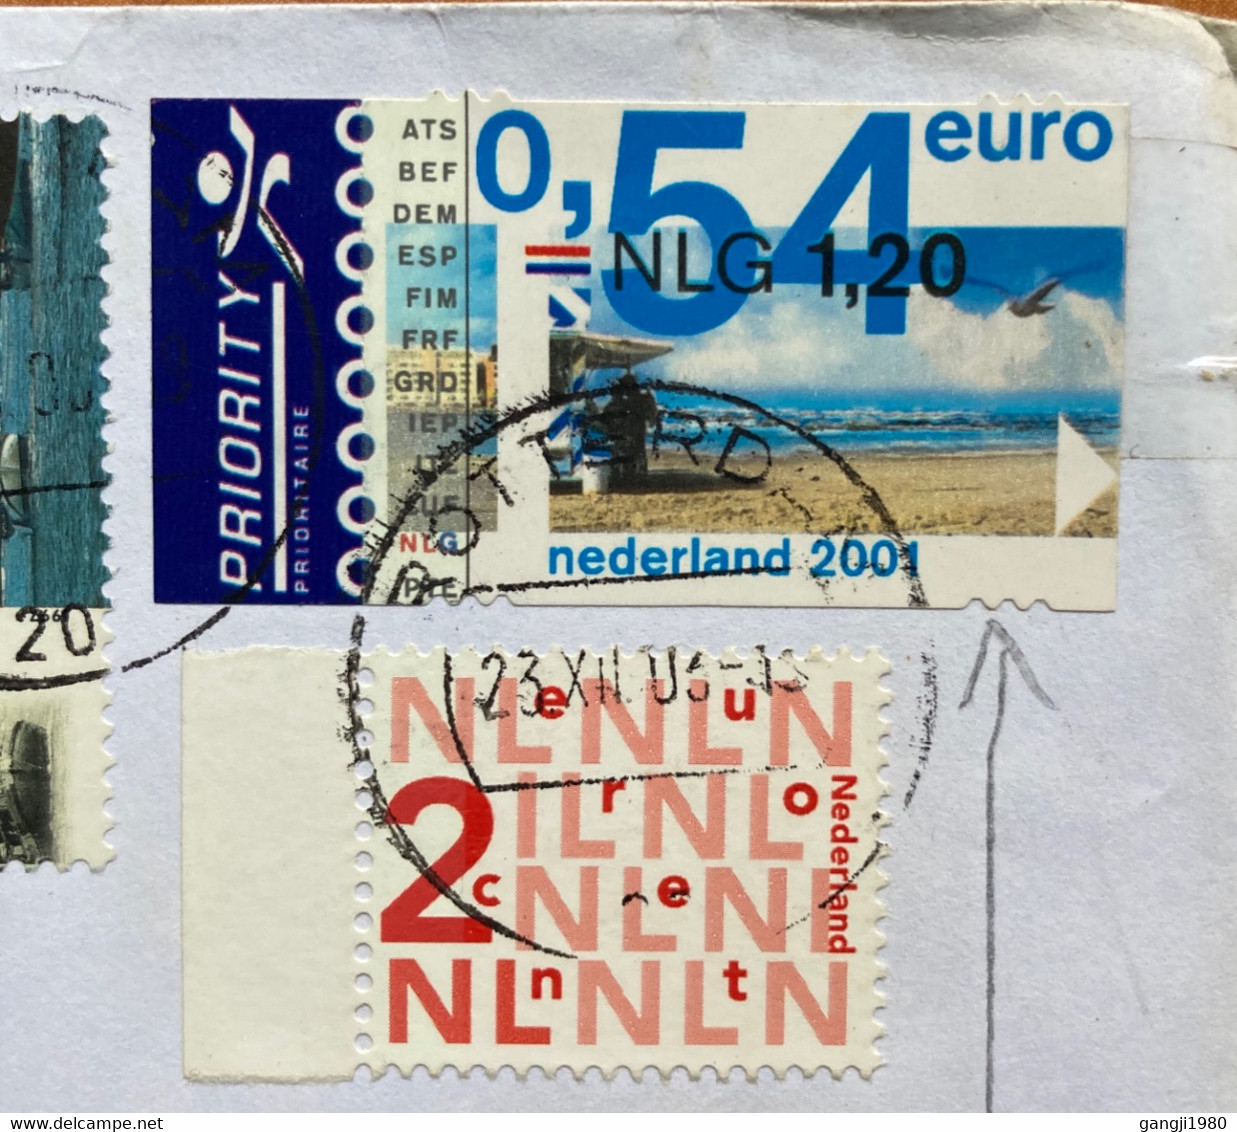 NEDERLAND 2004, PRIORITY SELF-ADHESIVE ATM STAMP ,5 VIEW OF SEA & CITY SHIP COVER TO LITHUANIA - Cartas & Documentos